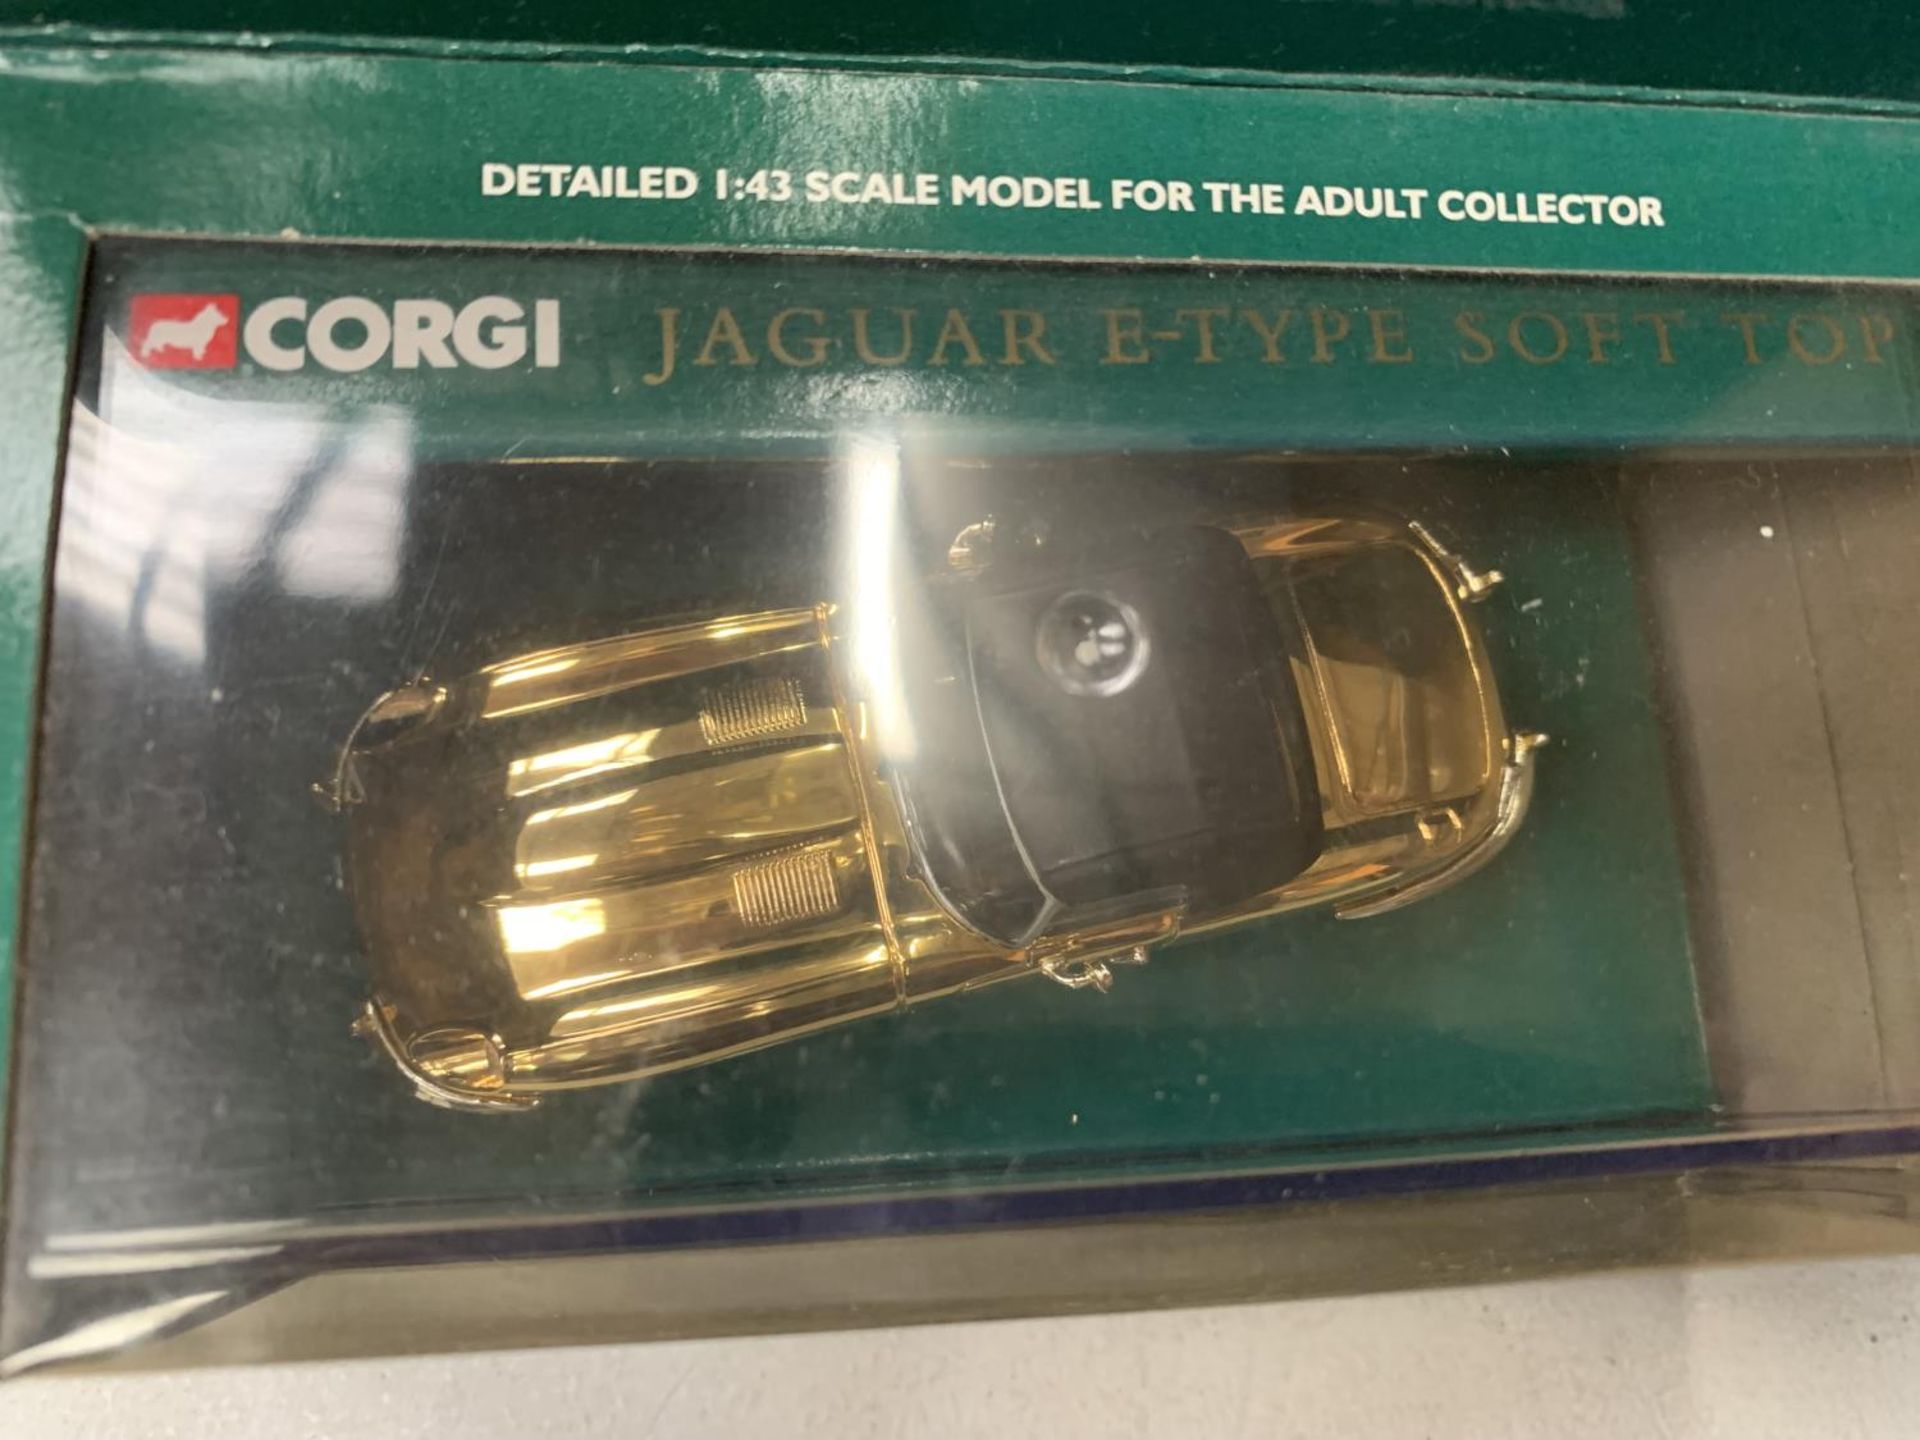 A BOXED CORGI GOLD PLATED E TYPE JAGUAR SOFT TOP - Image 3 of 3